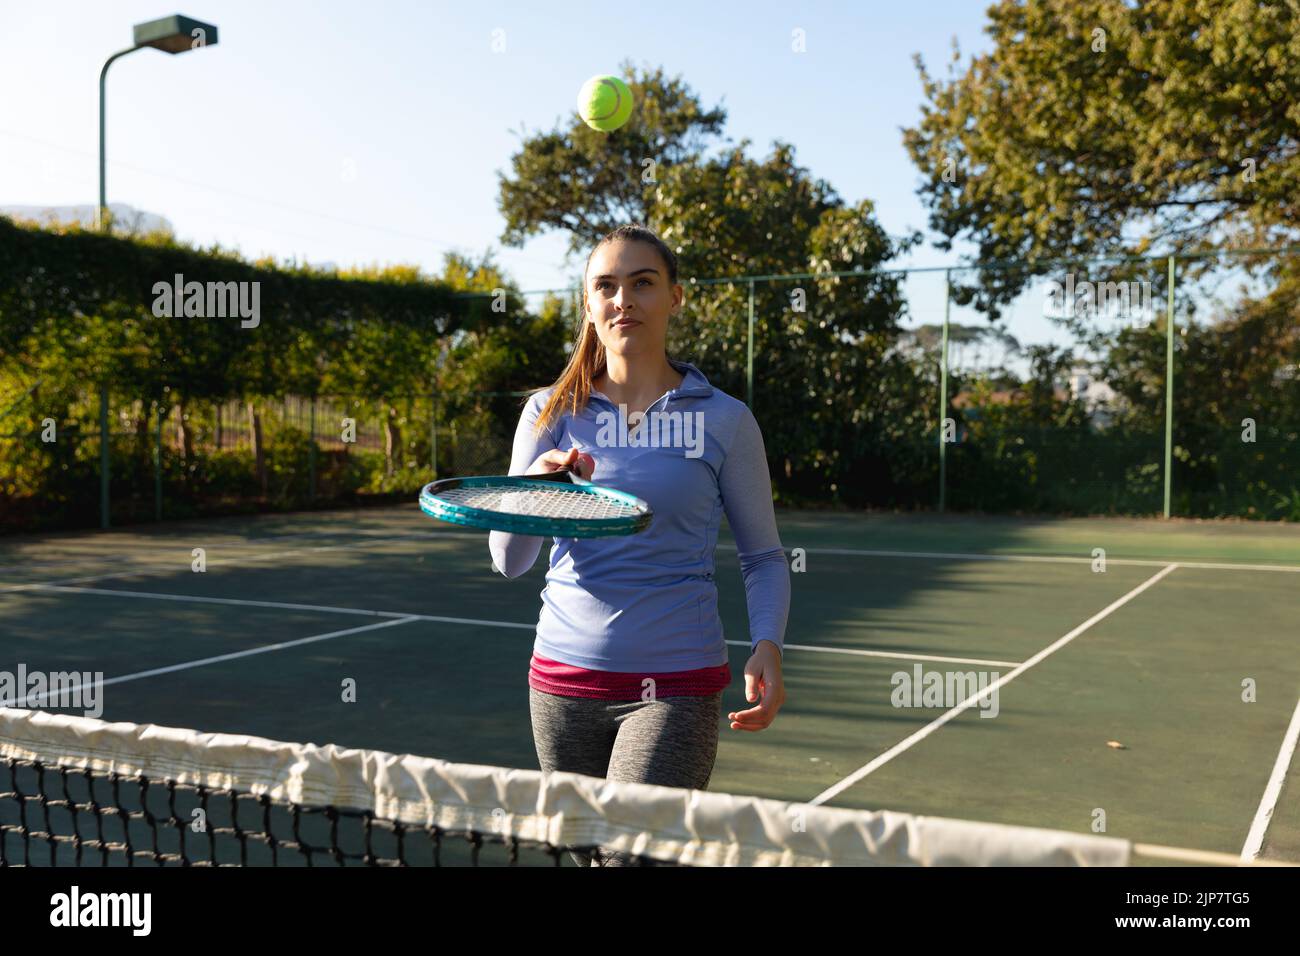 Mujer caucásica jugando tenis rebotando pelota sobre raqueta en cancha de tenis al aire libre Foto de stock